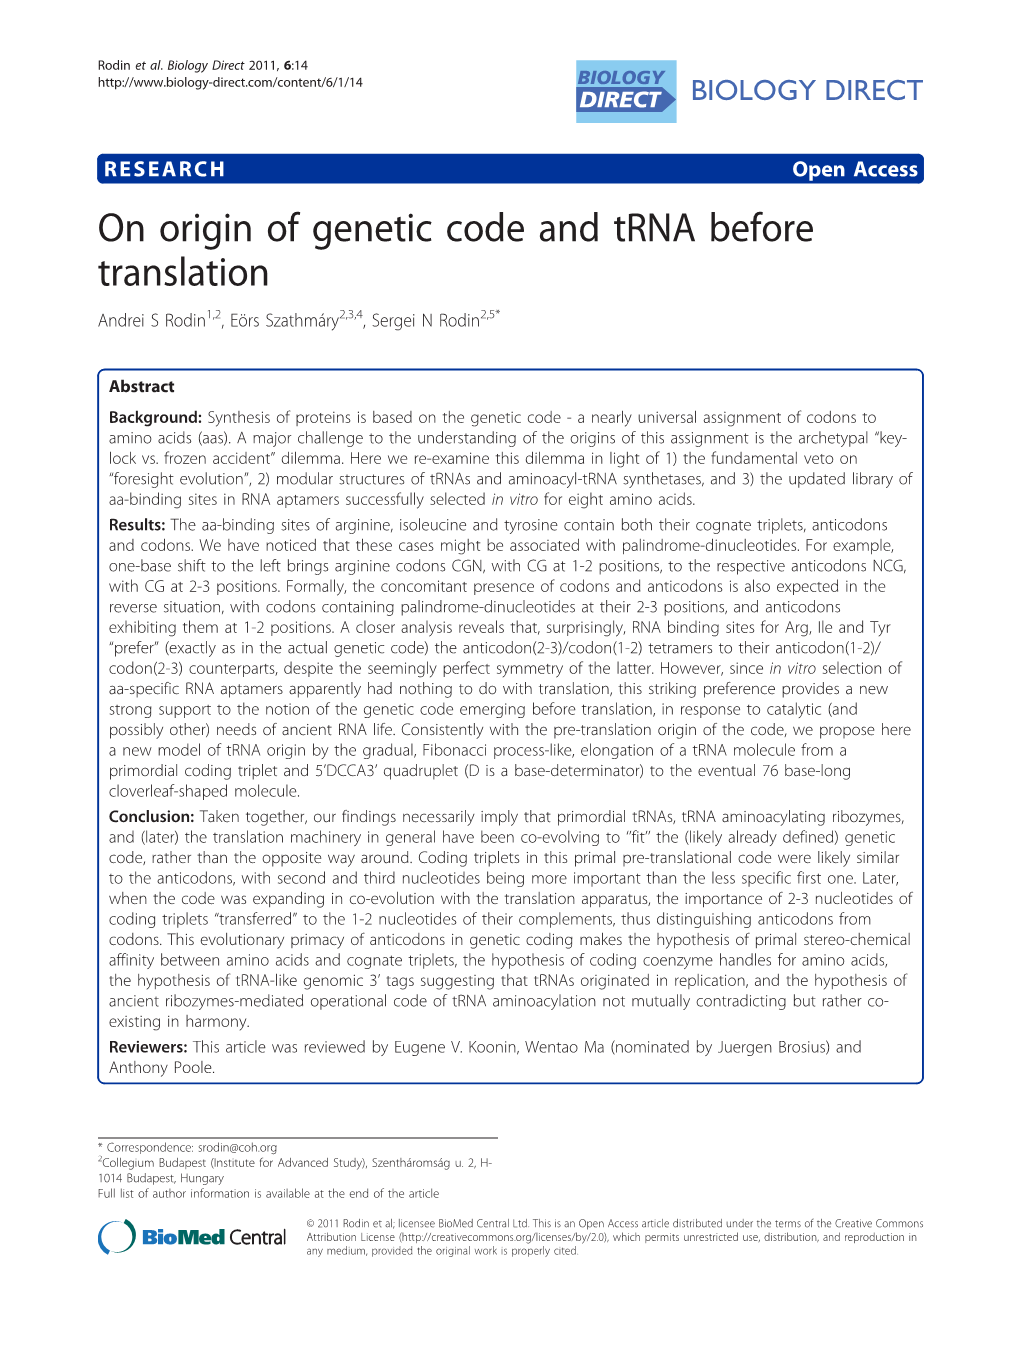 On Origin of Genetic Code and Trna Before Translation Andrei S Rodin1,2, Eörs Szathmáry2,3,4, Sergei N Rodin2,5*